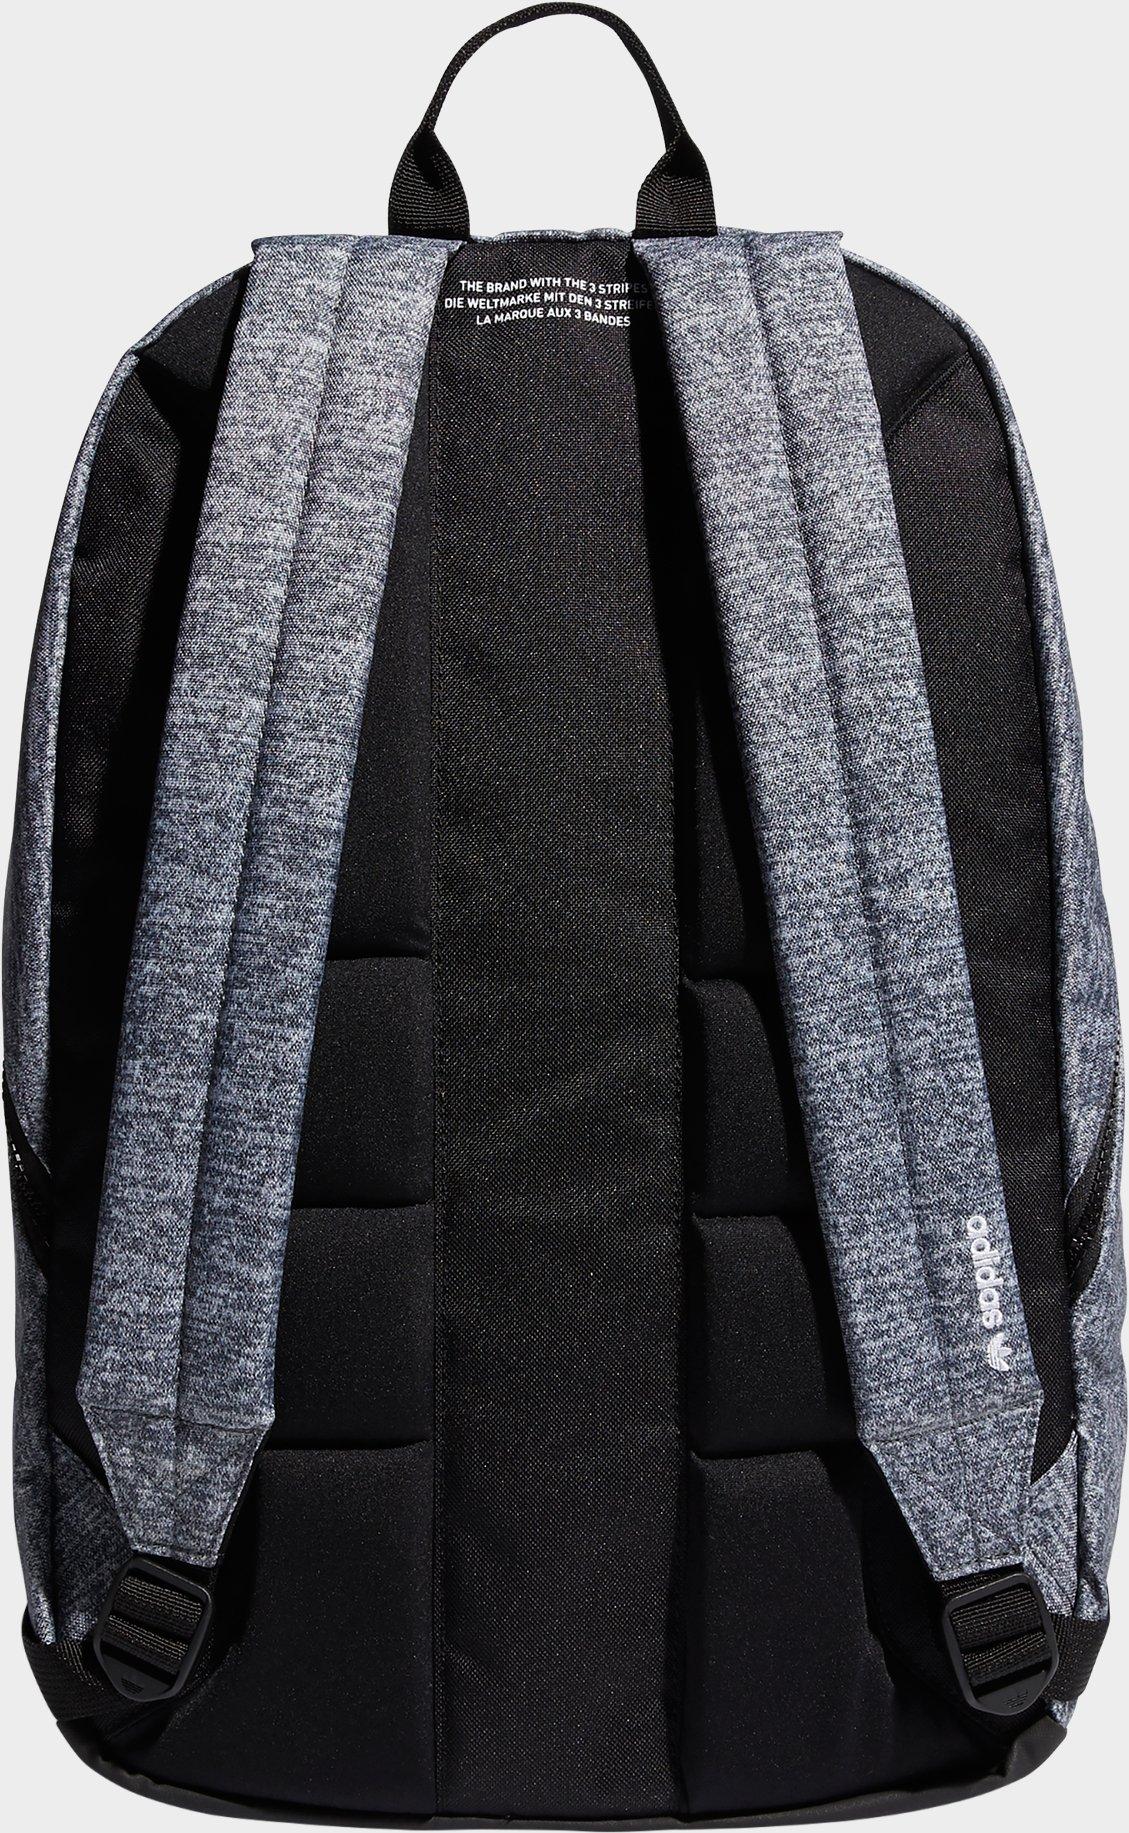 grey backpack adidas